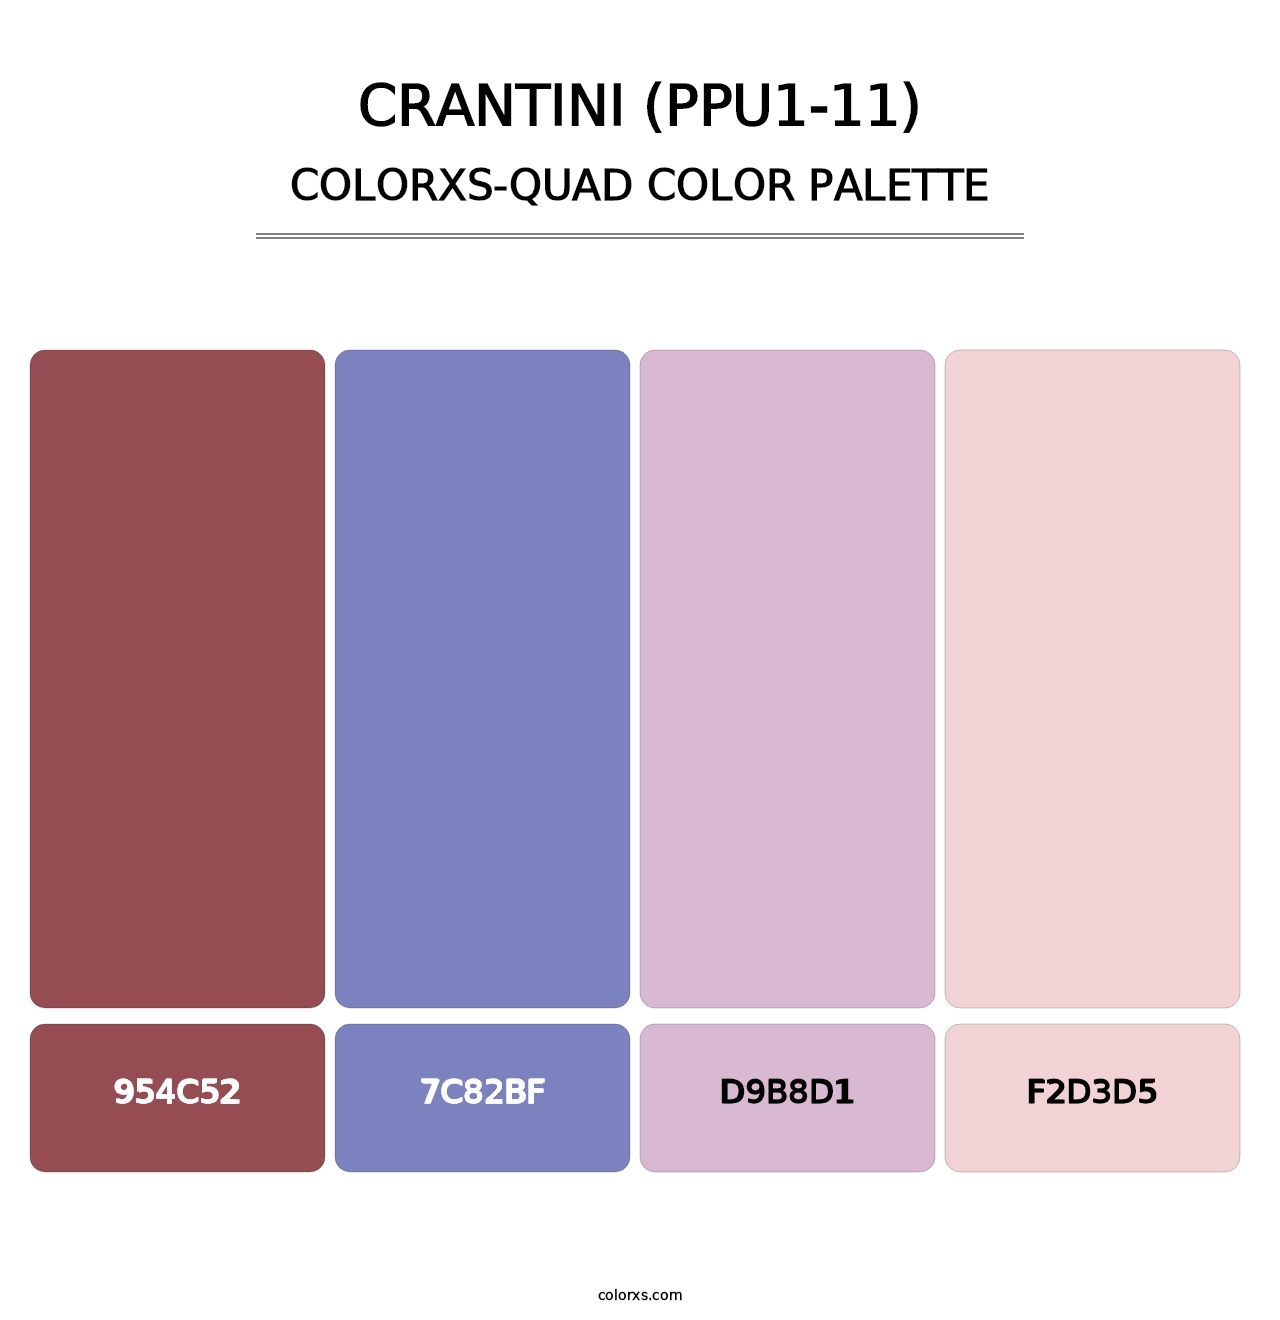 Crantini (PPU1-11) - Colorxs Quad Palette